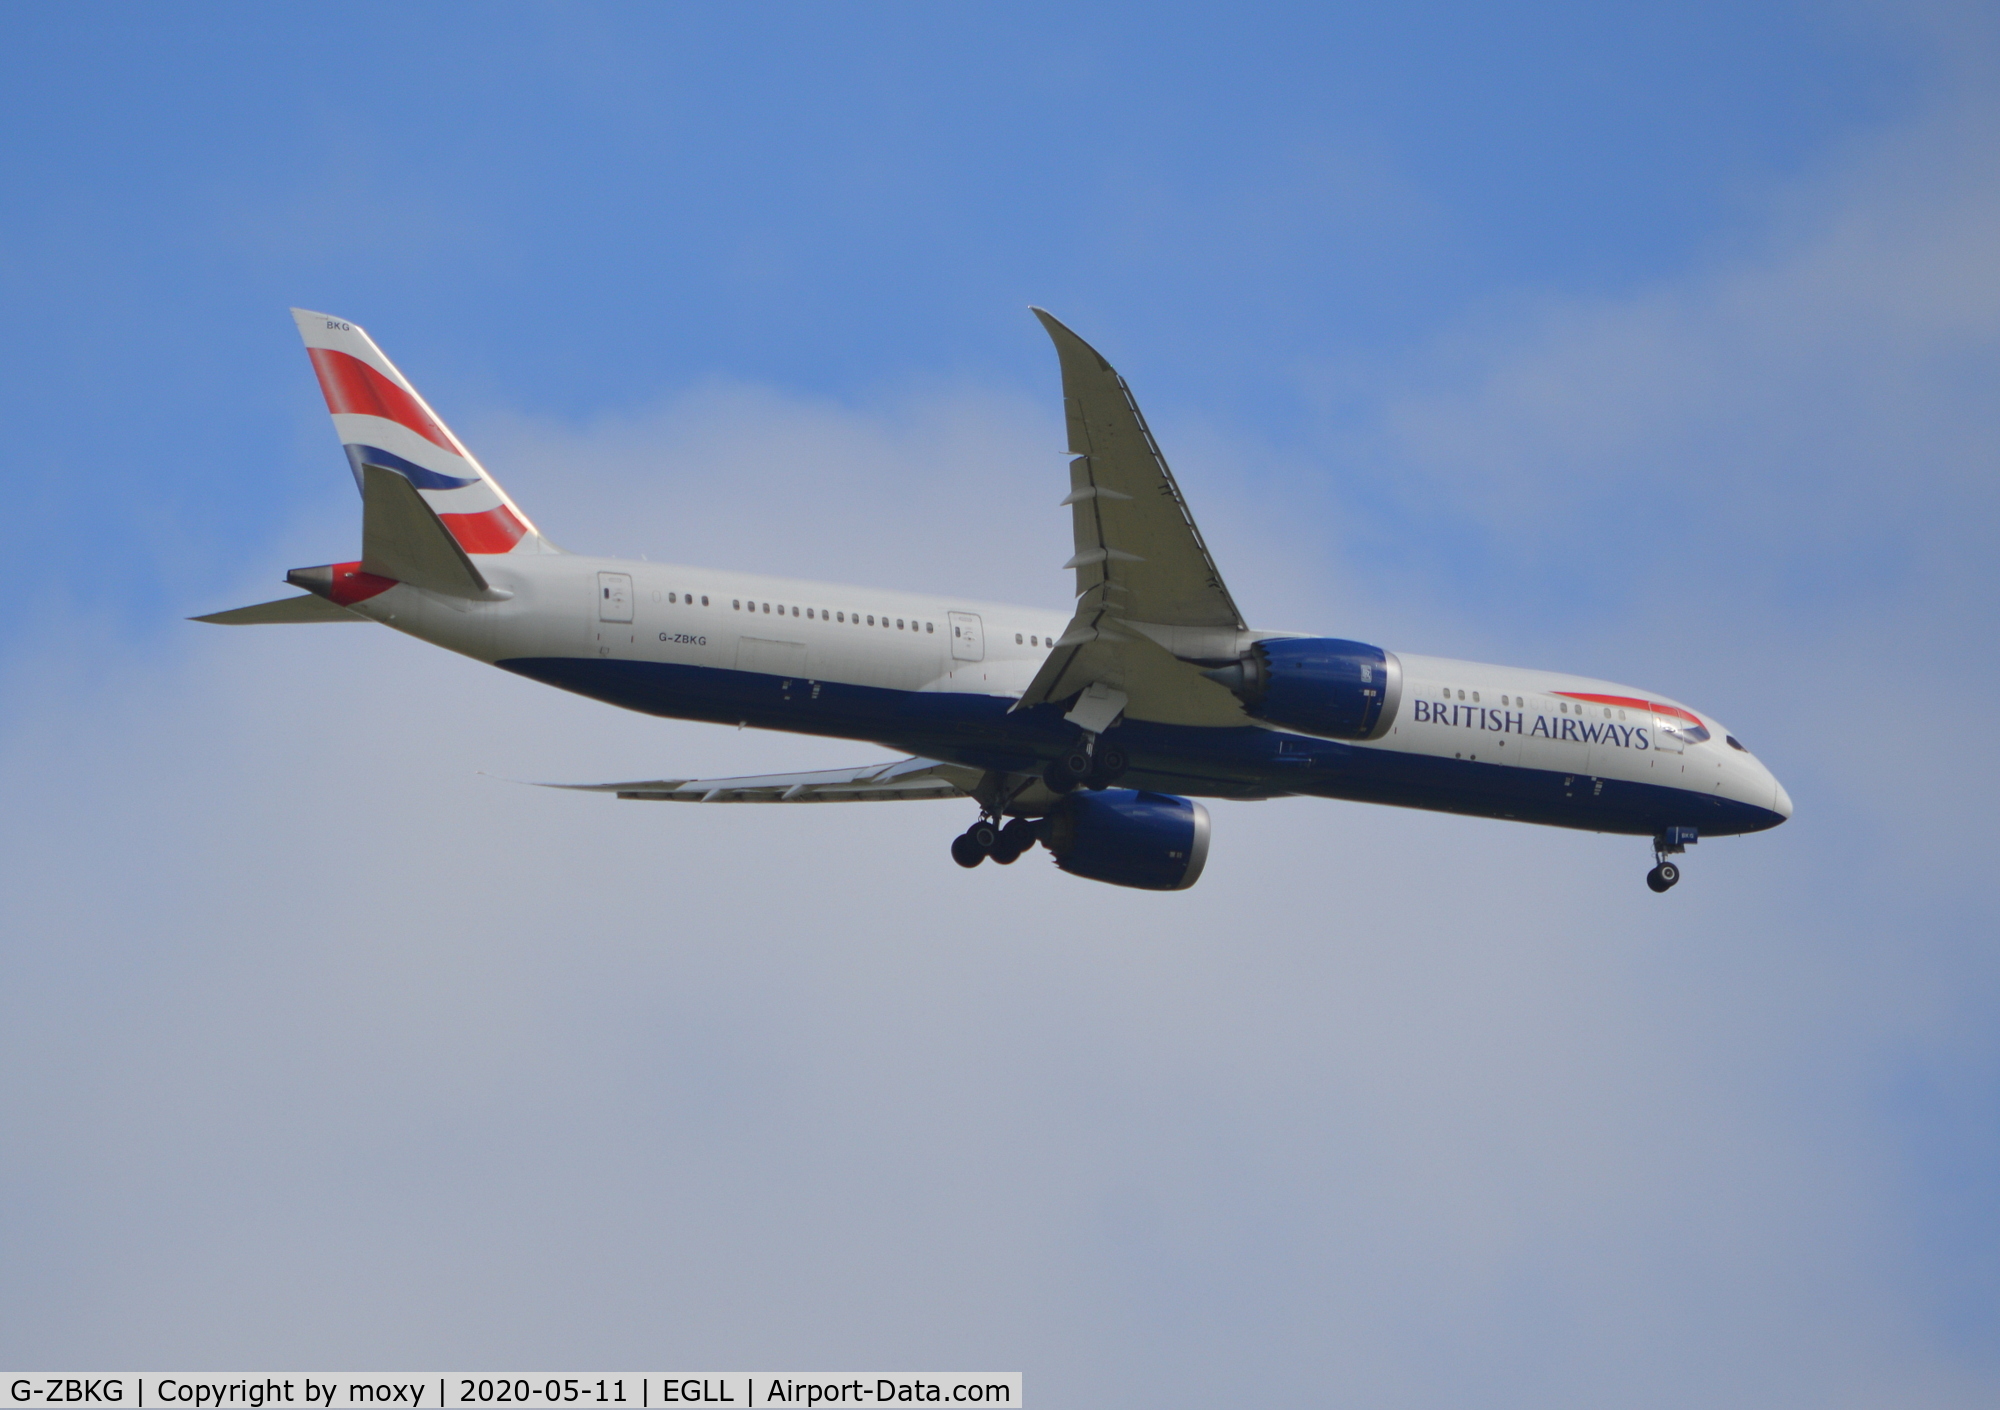 G-ZBKG, 2016 Boeing 787-9 Dreamliner C/N 38623, Boeing 787-9 Dreamliner on finals to London Heathrow.